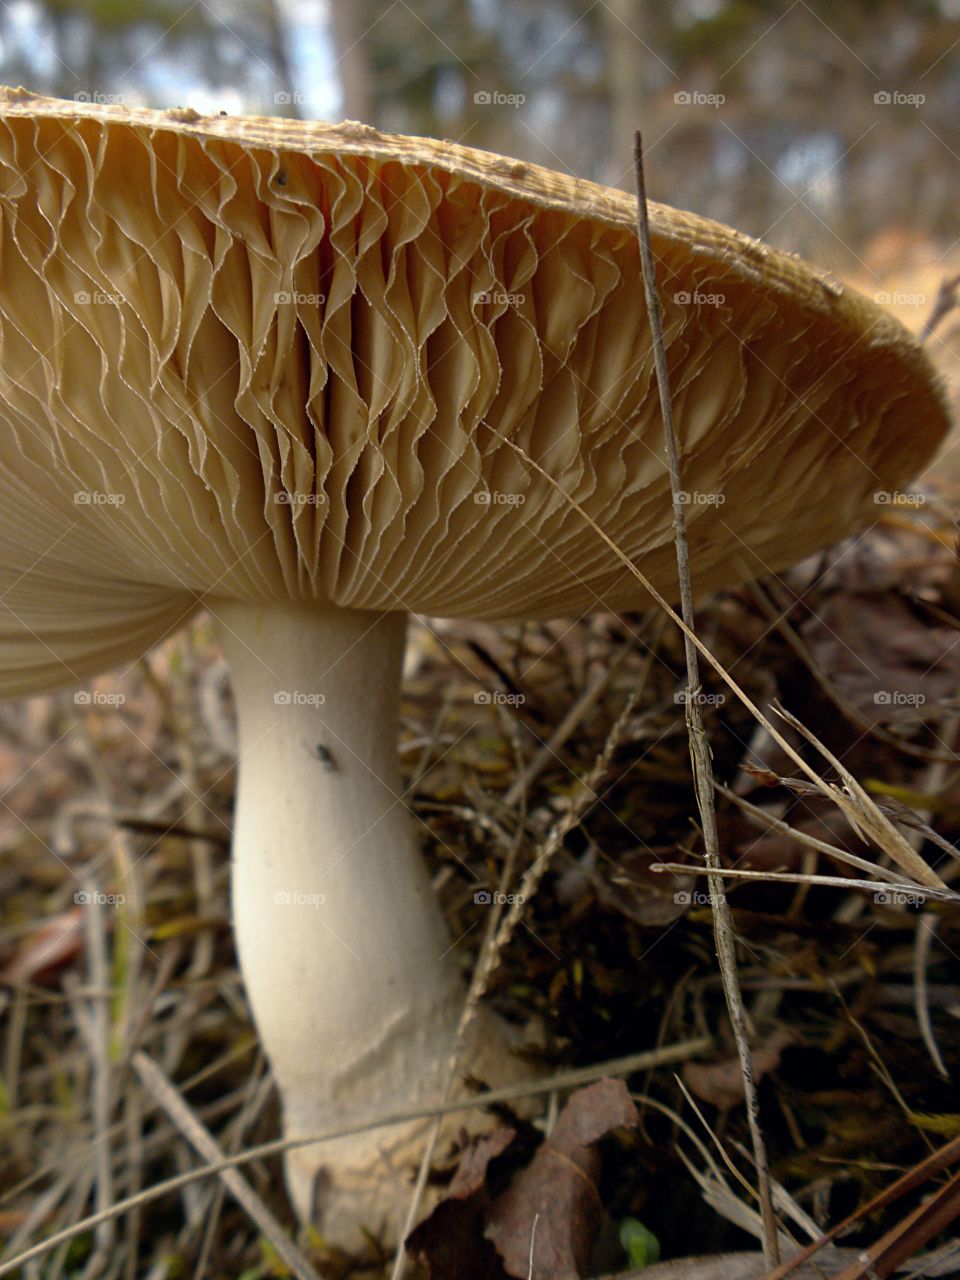 fungal beauty